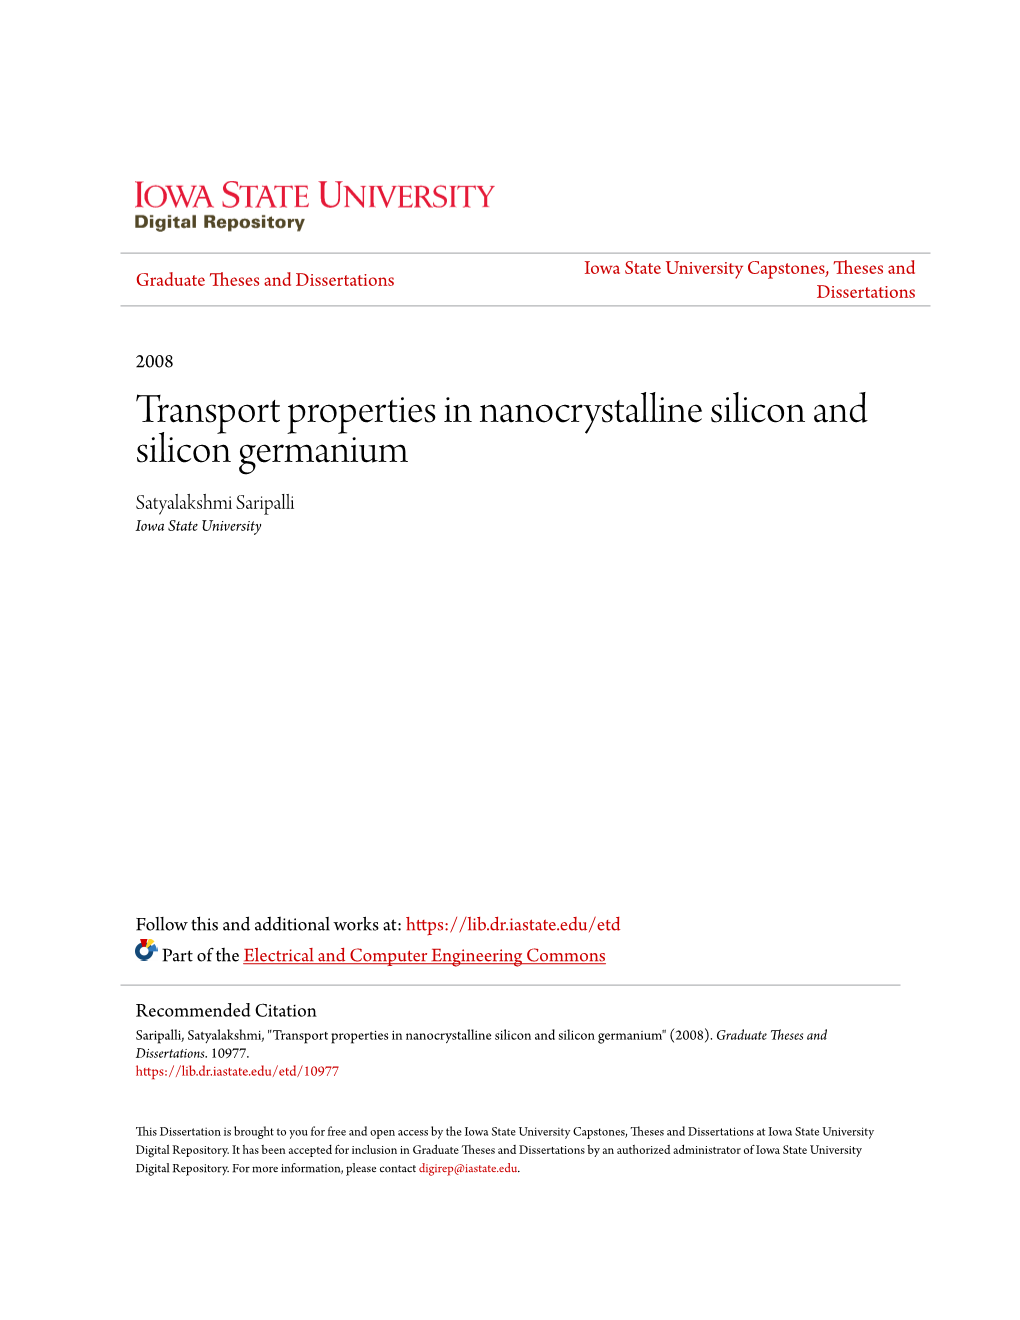 Transport Properties in Nanocrystalline Silicon and Silicon Germanium Satyalakshmi Saripalli Iowa State University